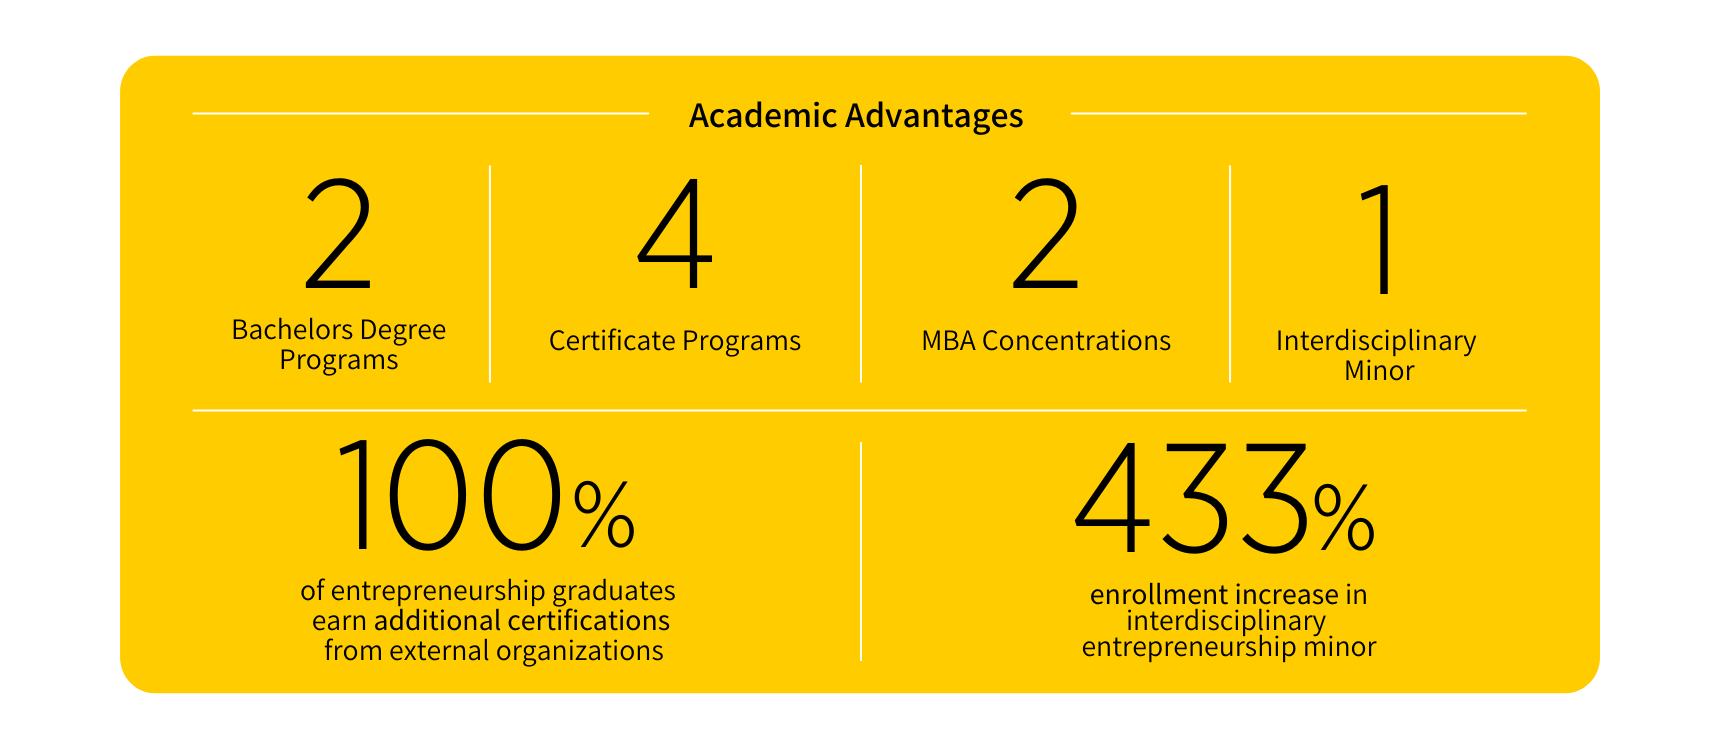 Academic Advantages of the Entrepreneurship Program